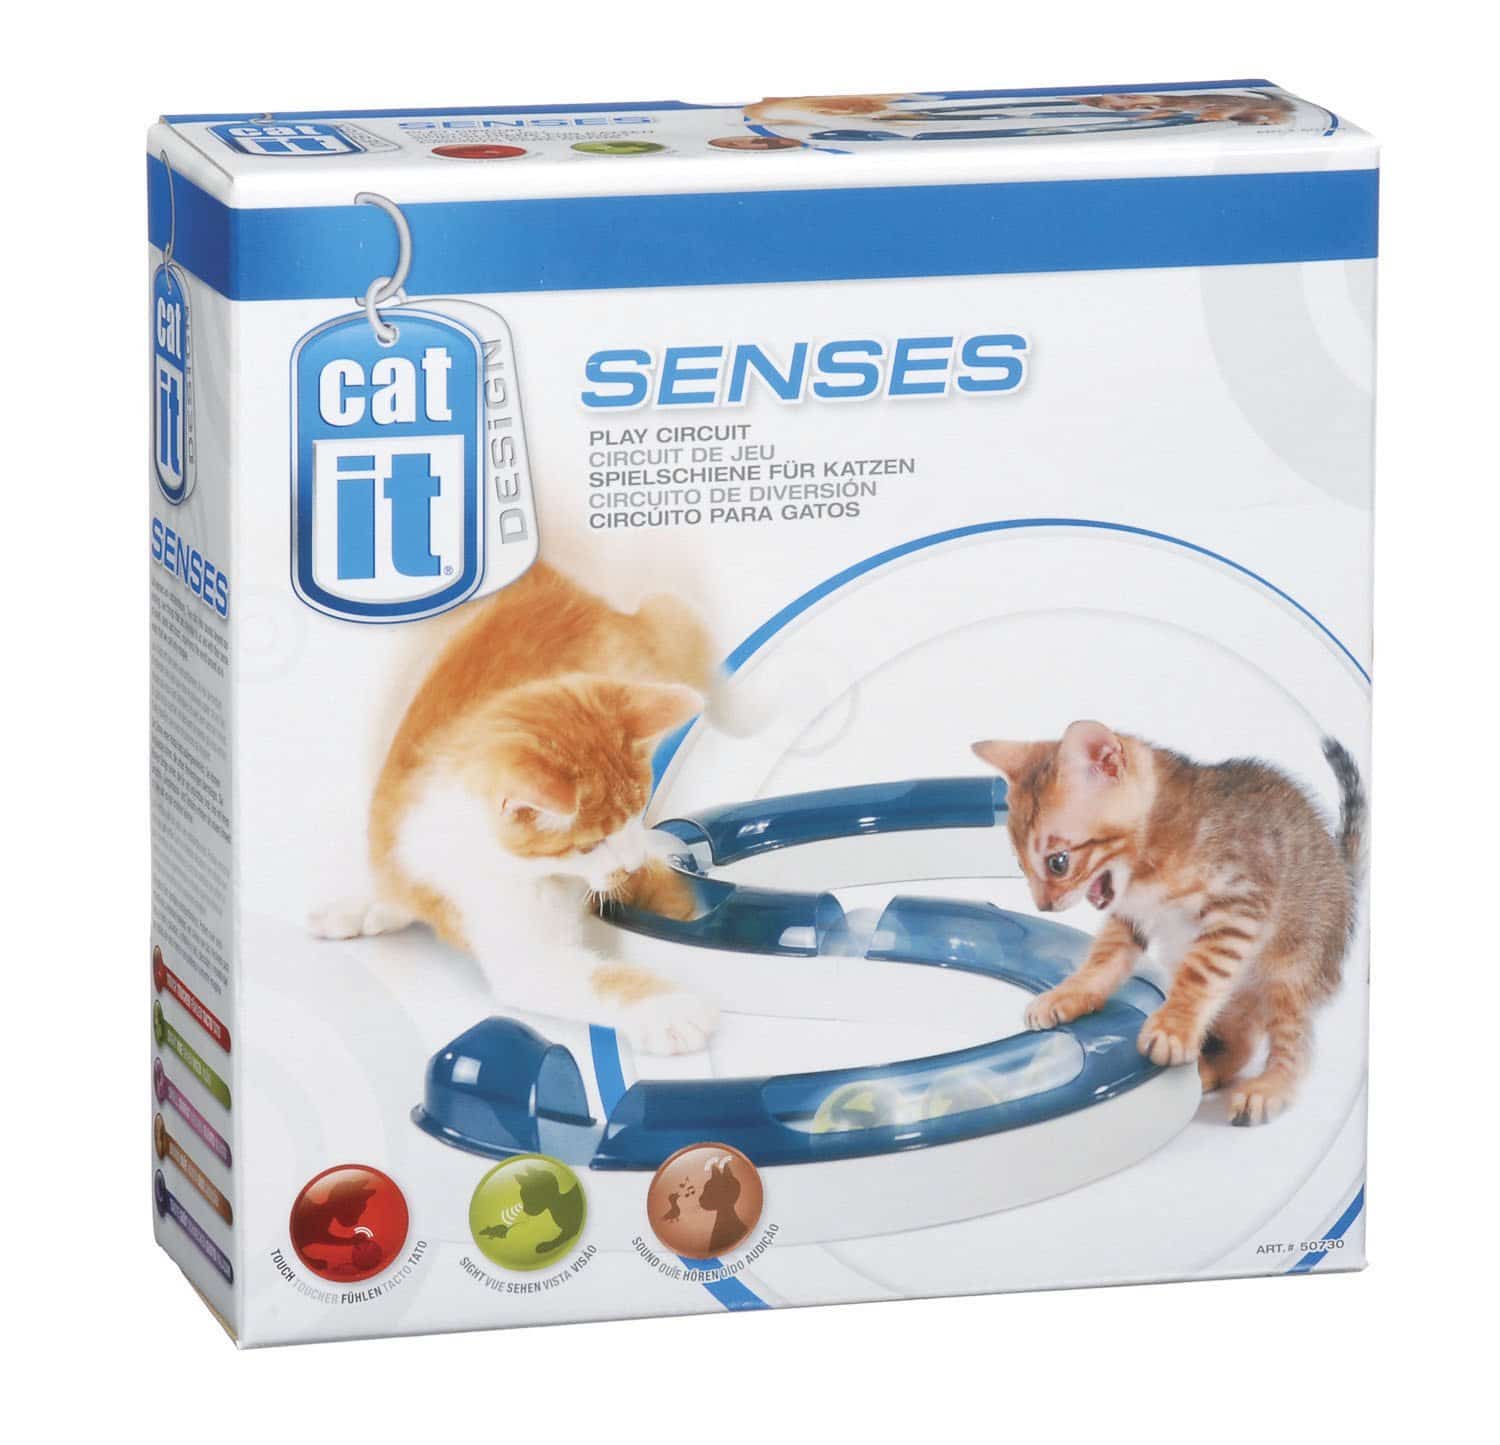  CatIt Senses Play Circuit